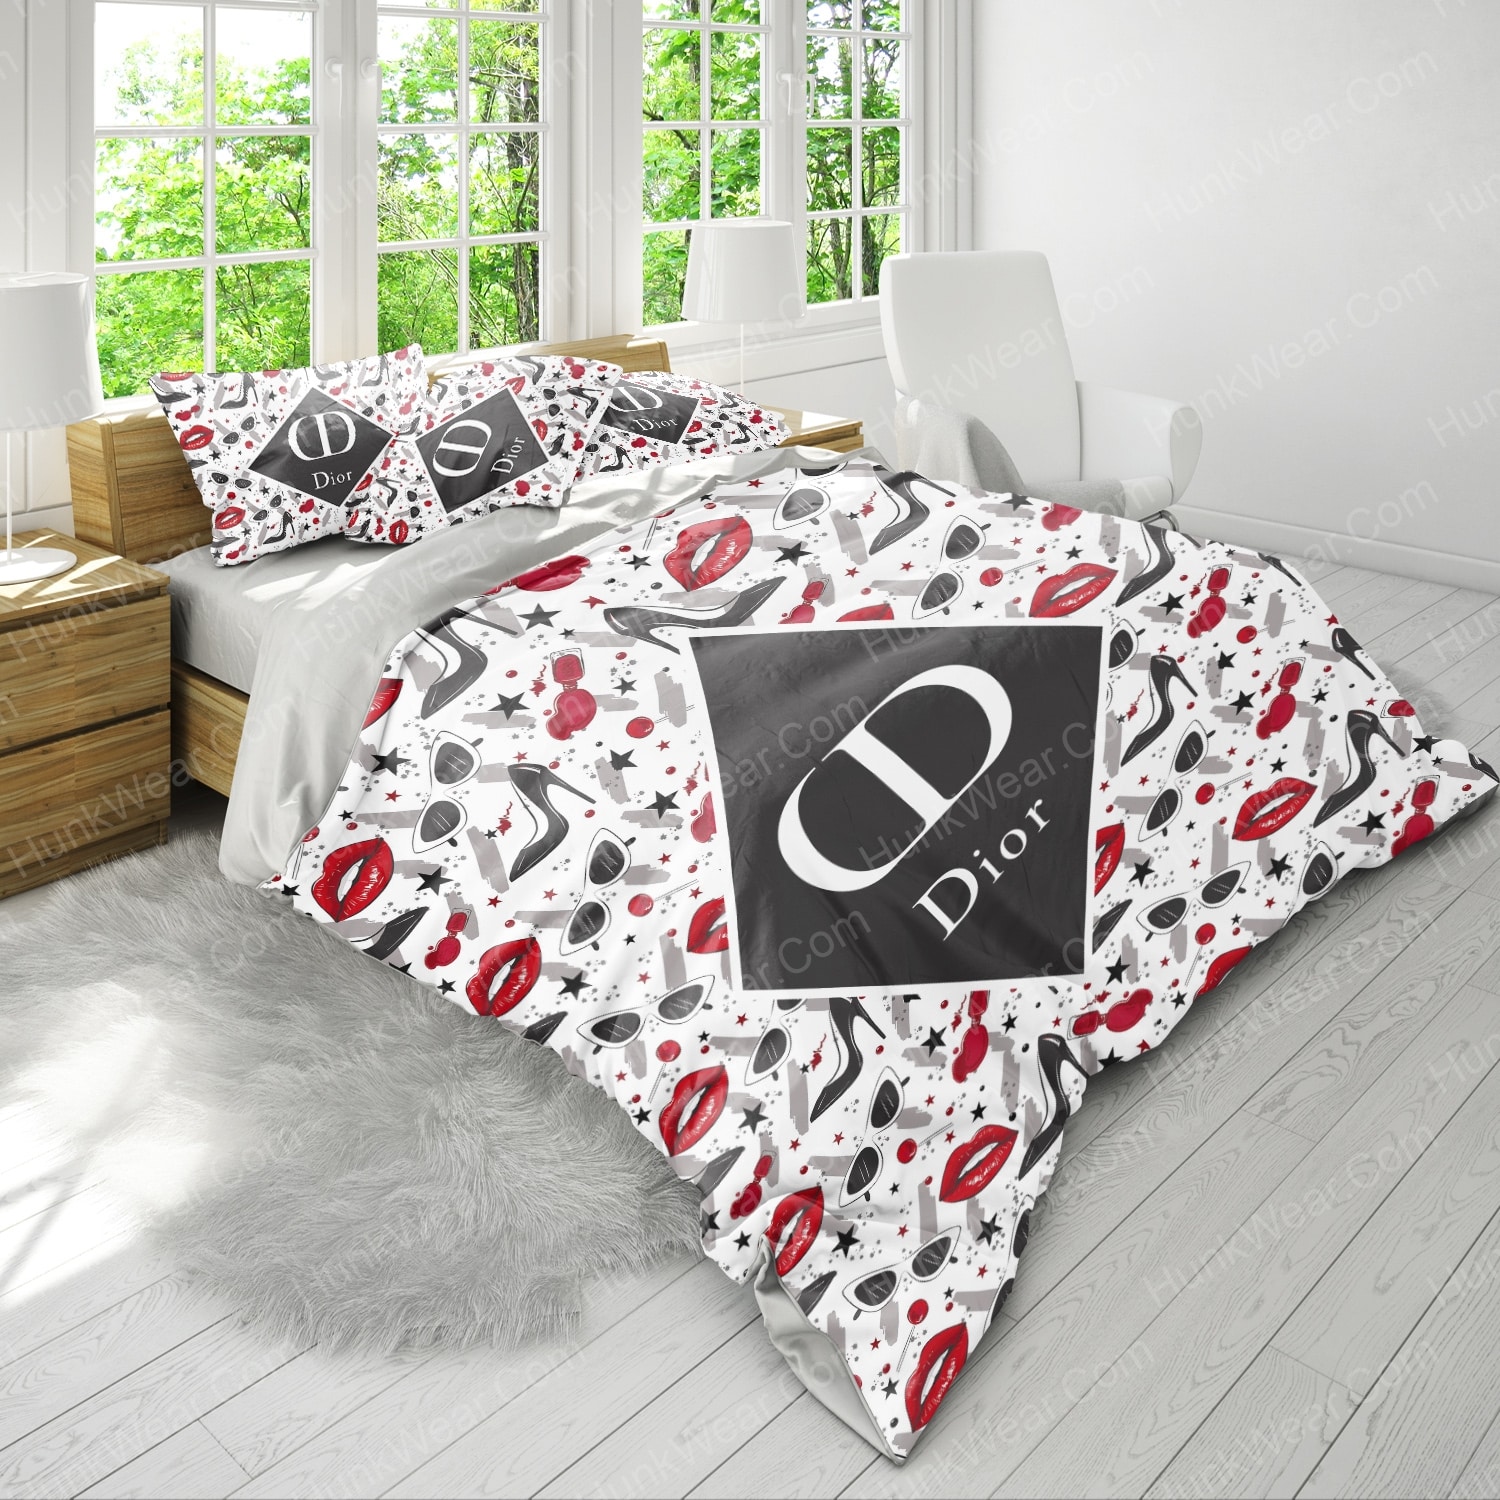 dior heels glasses and red lips pattern bed set bedding set 3